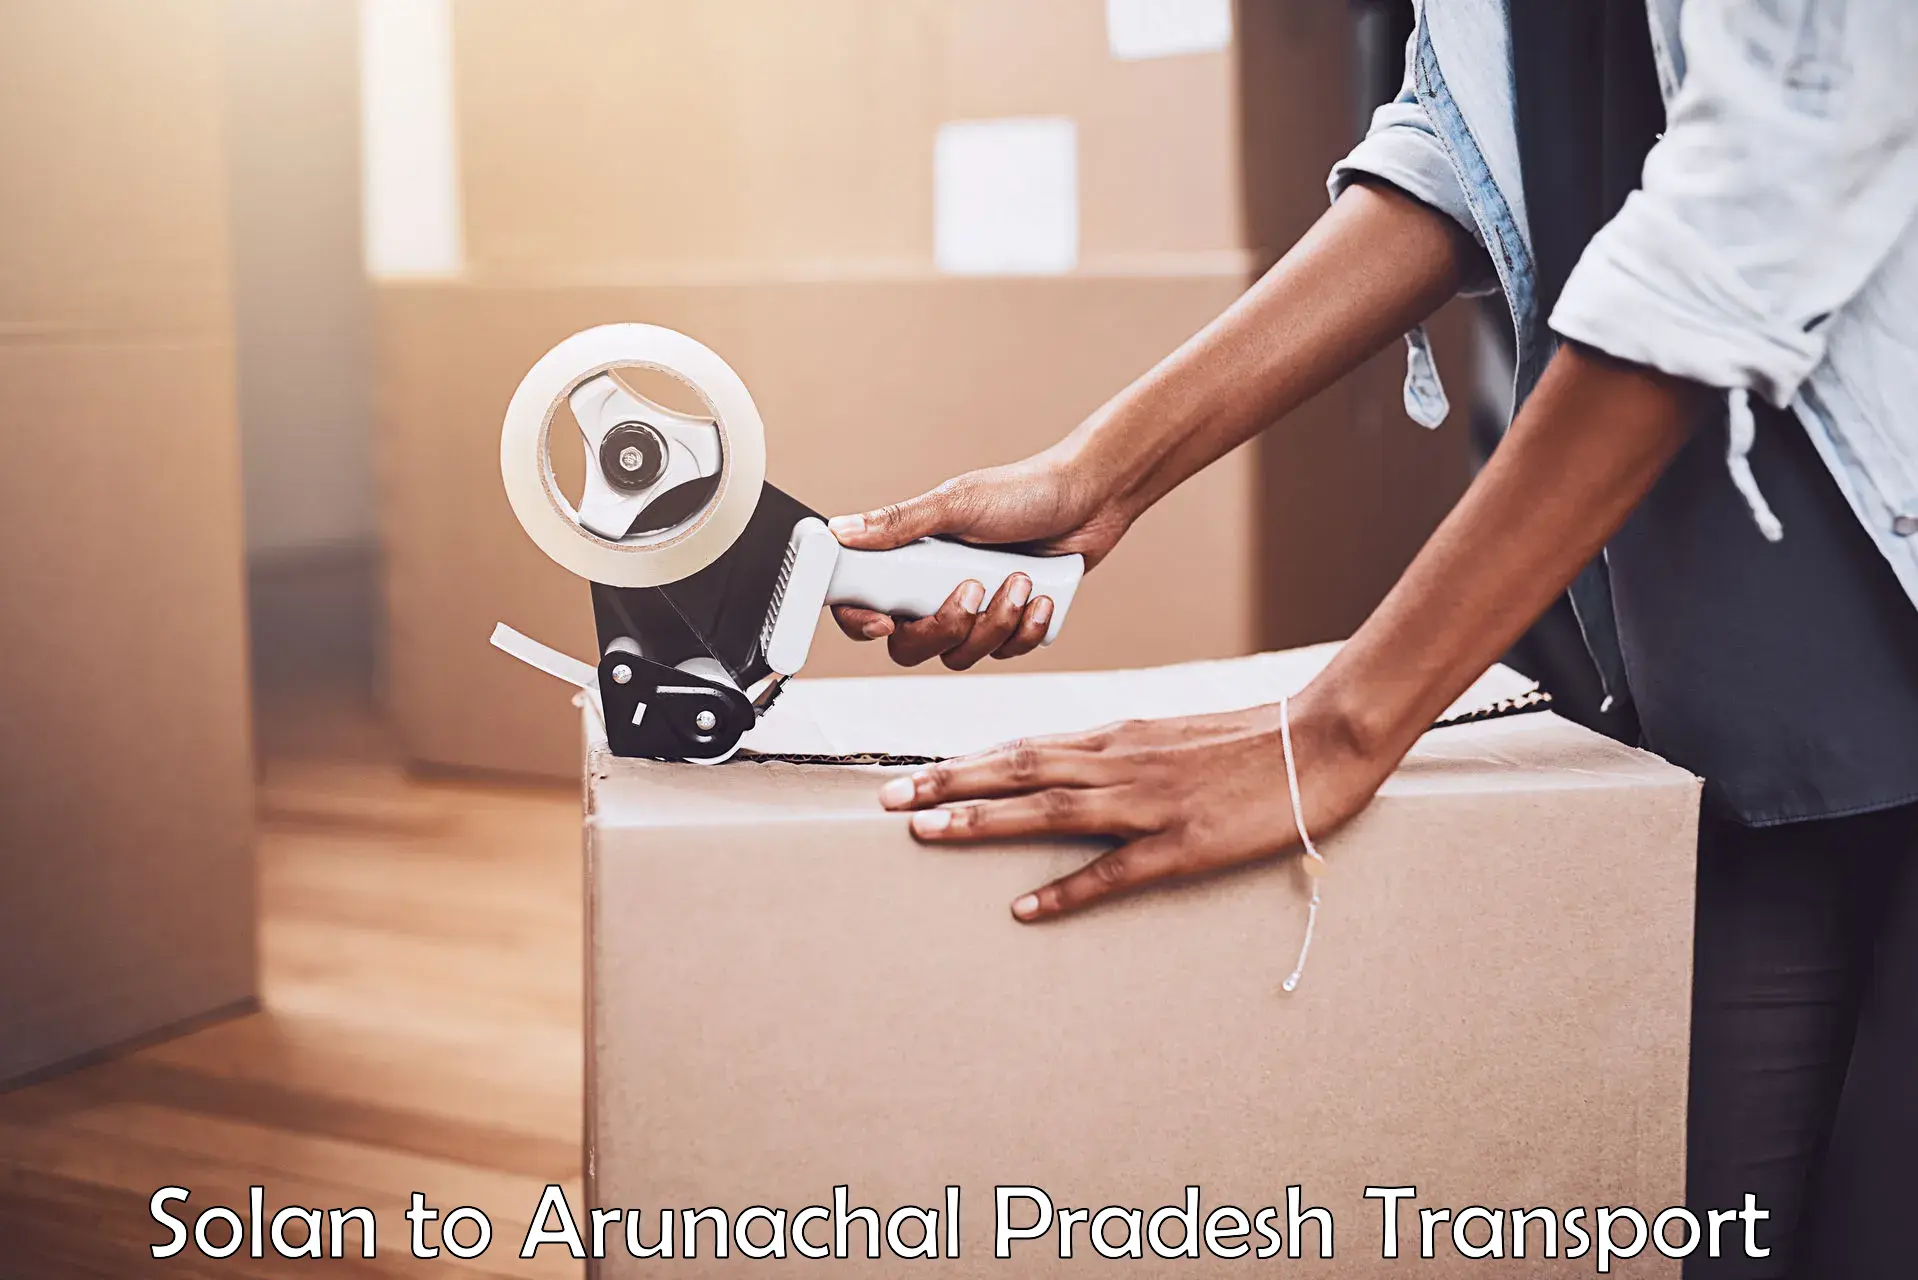 Part load transport service in India Solan to Arunachal Pradesh